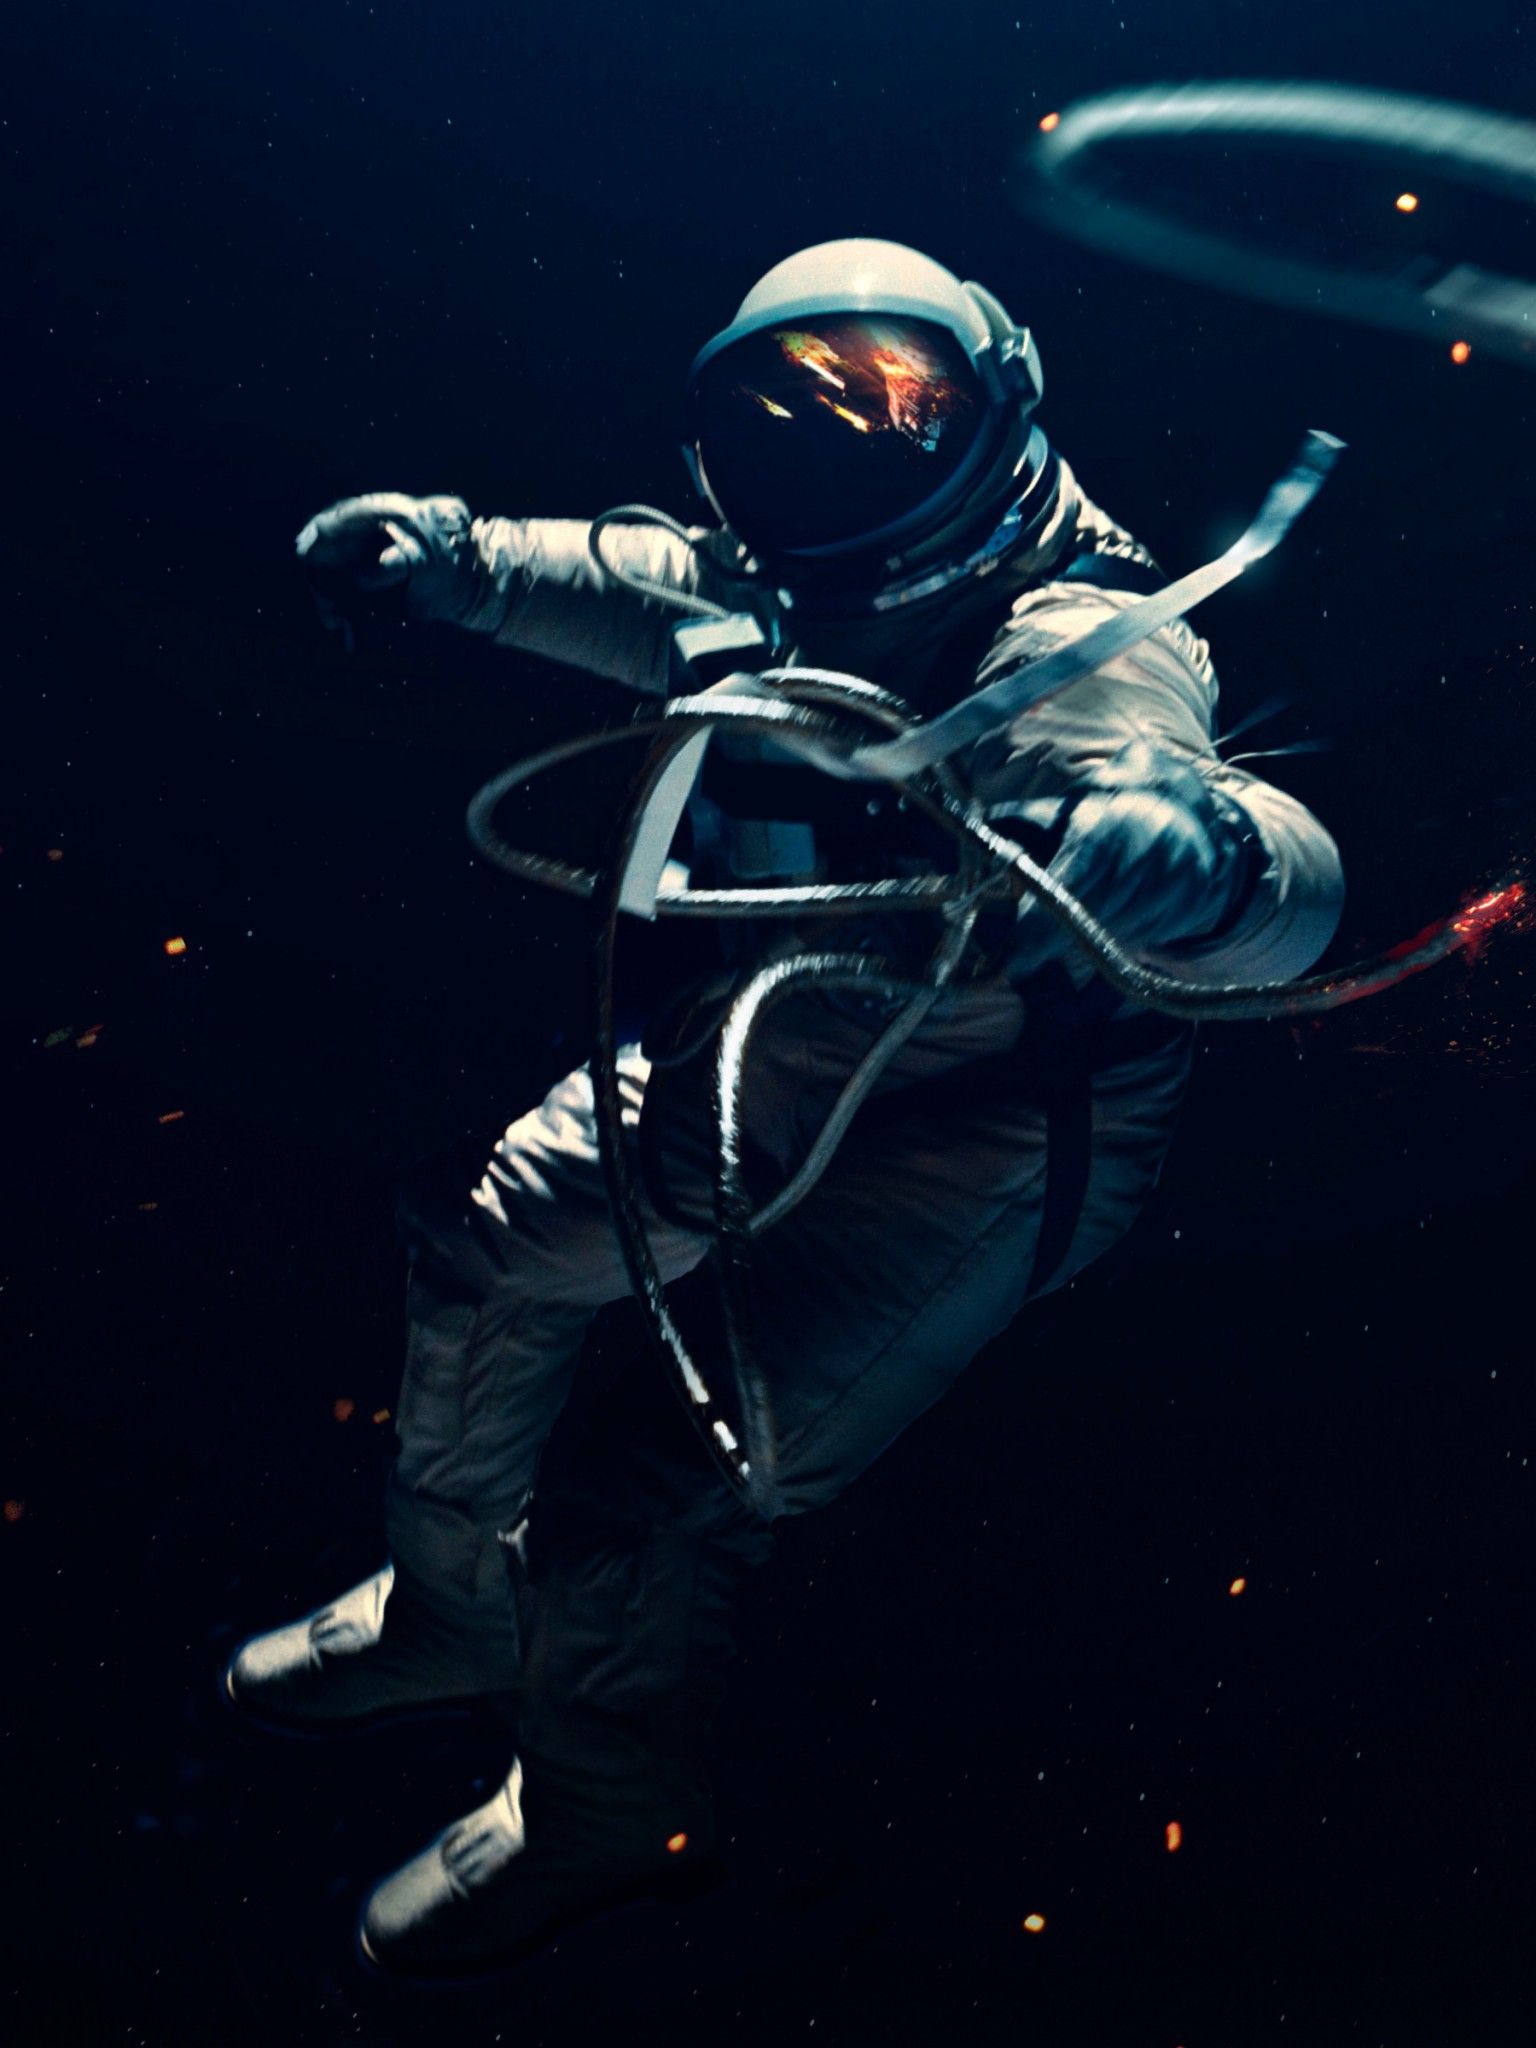 Astronaut 4K Wallpaper, Space suit, Dark background, Lost in Space, Space Adventure, Space